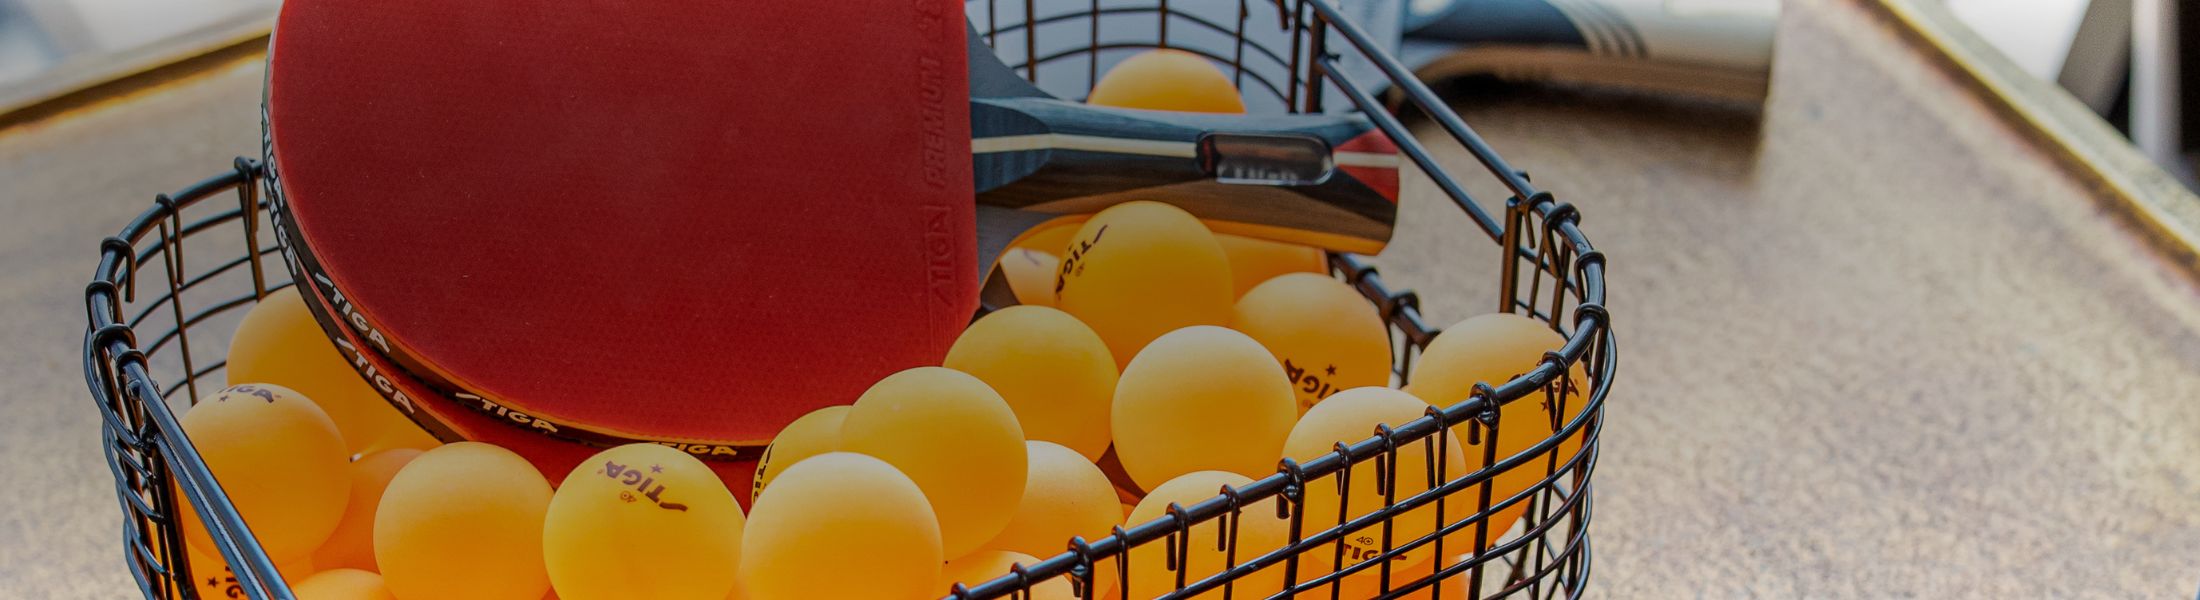 Ping Pong Paddles Table Tennis Rackets Bundled Sets STIGA US